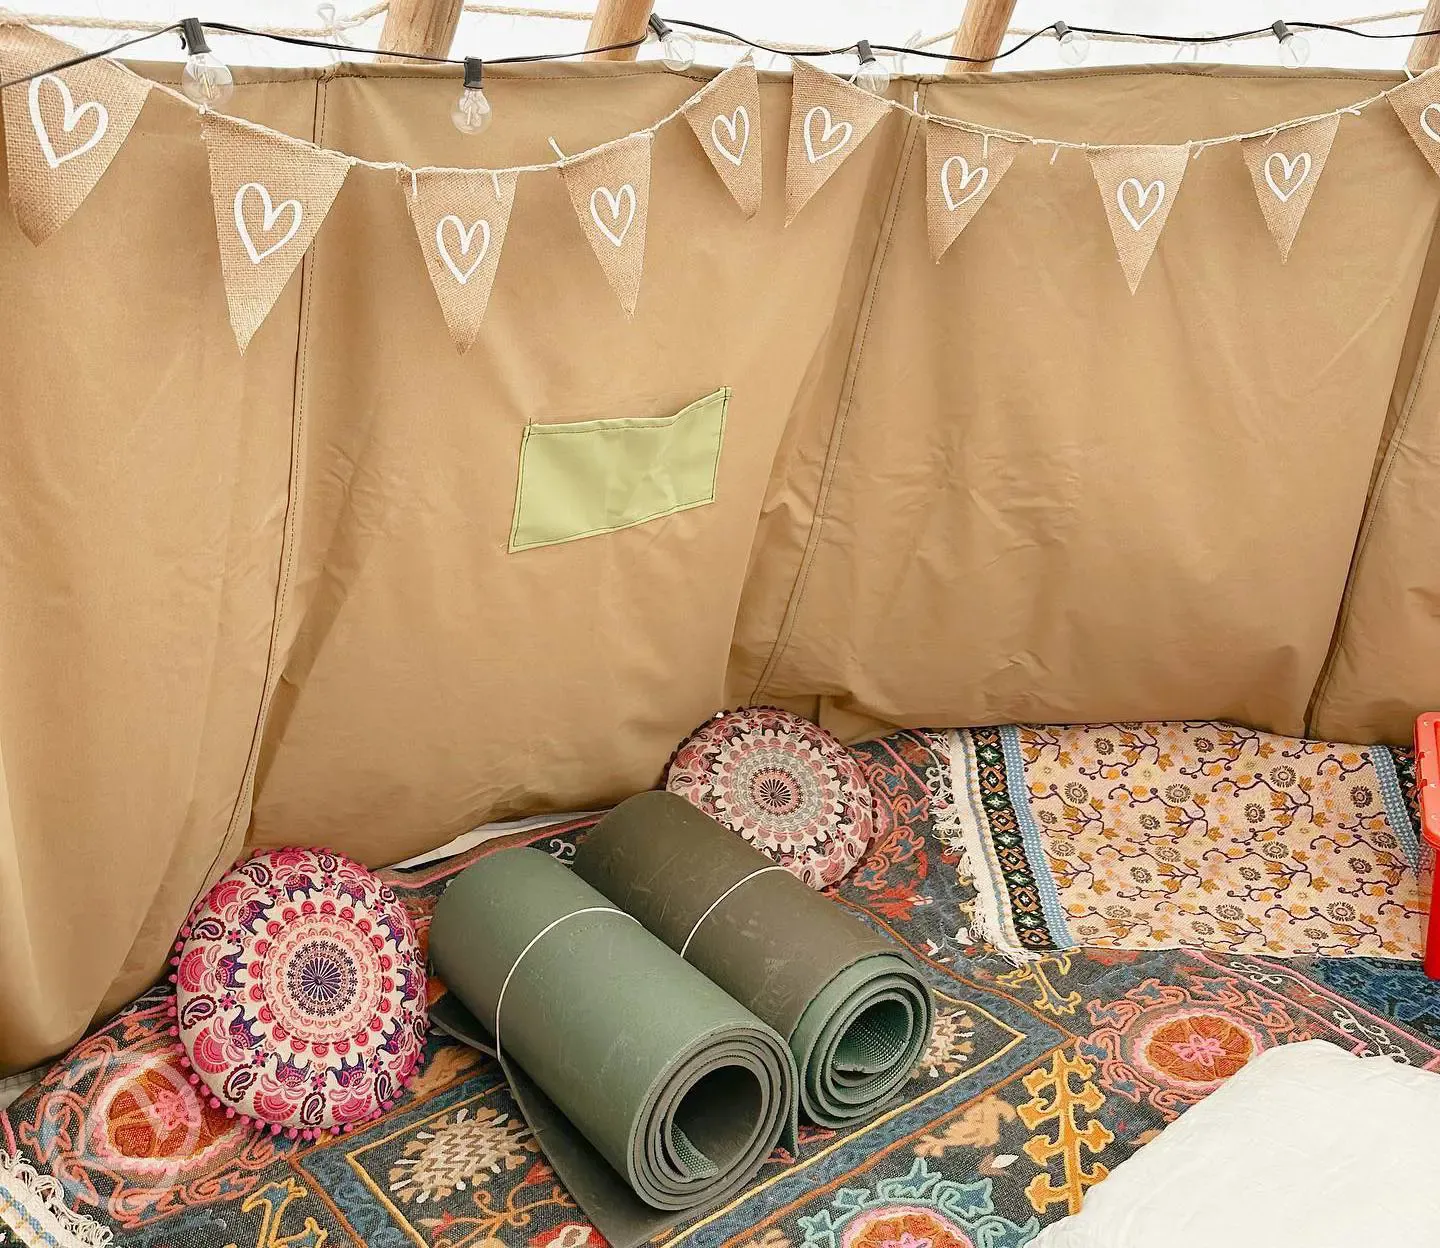 Tipi camping mats